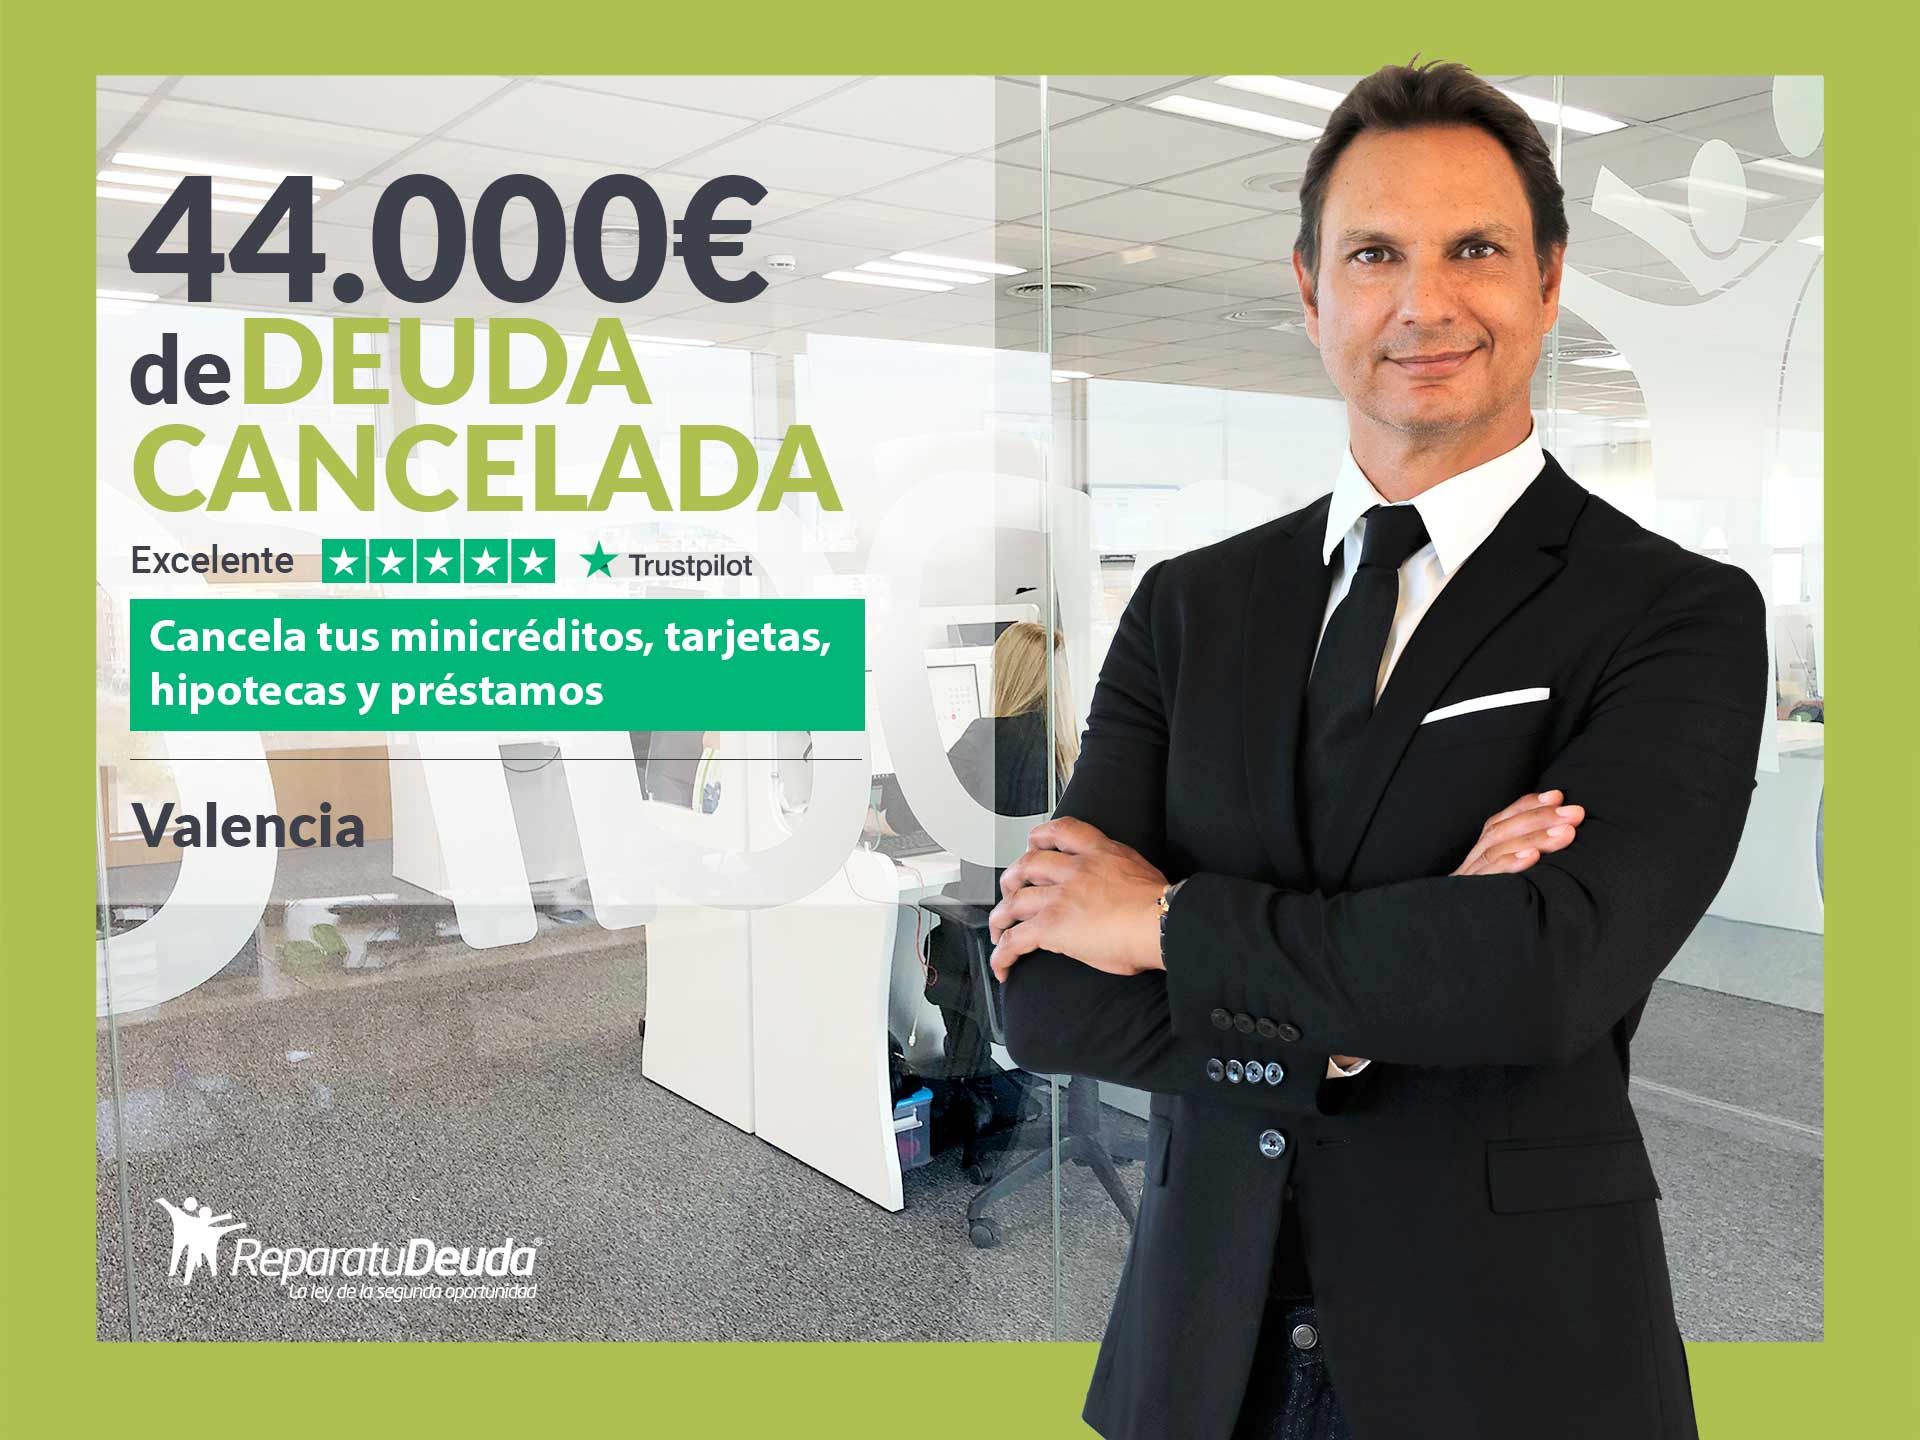 Fotografia Repara tu Deuda Abogados cancela 44.000 € en Valencia